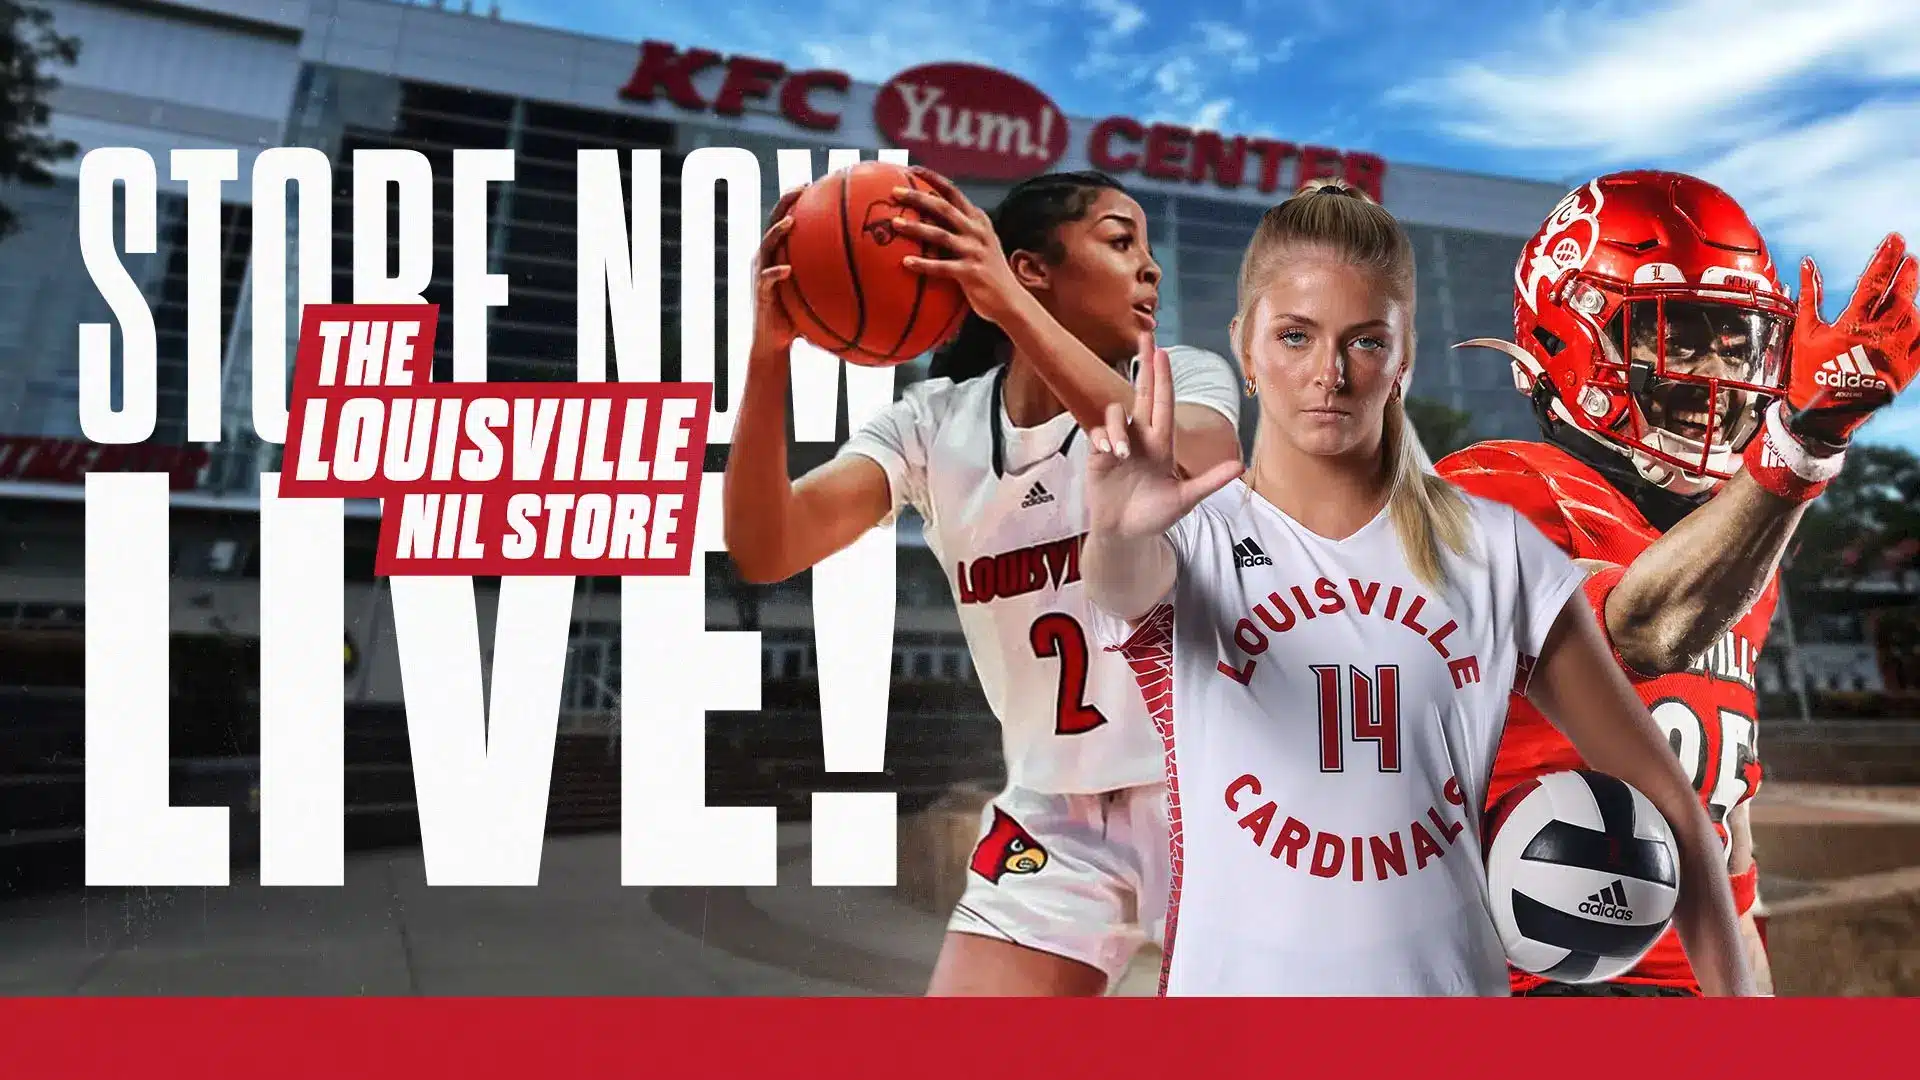  Louisville Cardinals Volleyball Logo Officially